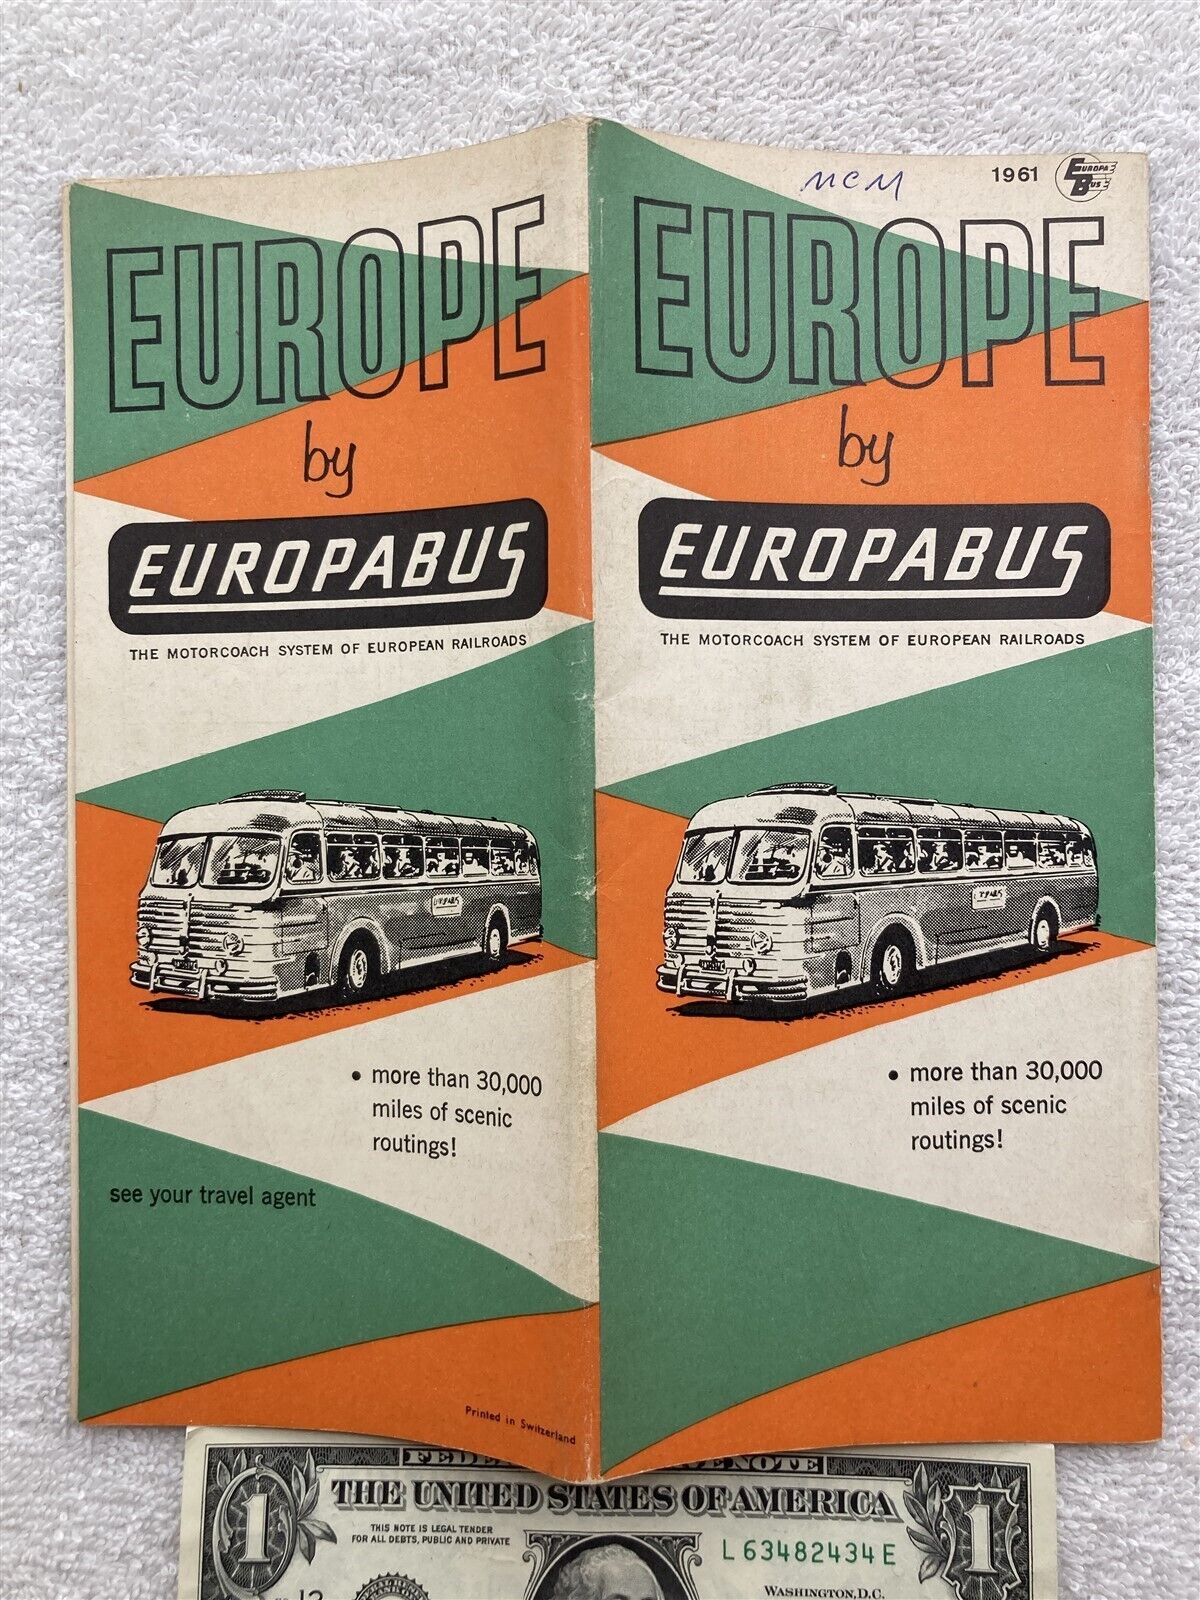 1961 Europe by Europabus Euro PA Bus Railroad Schedule Vintage